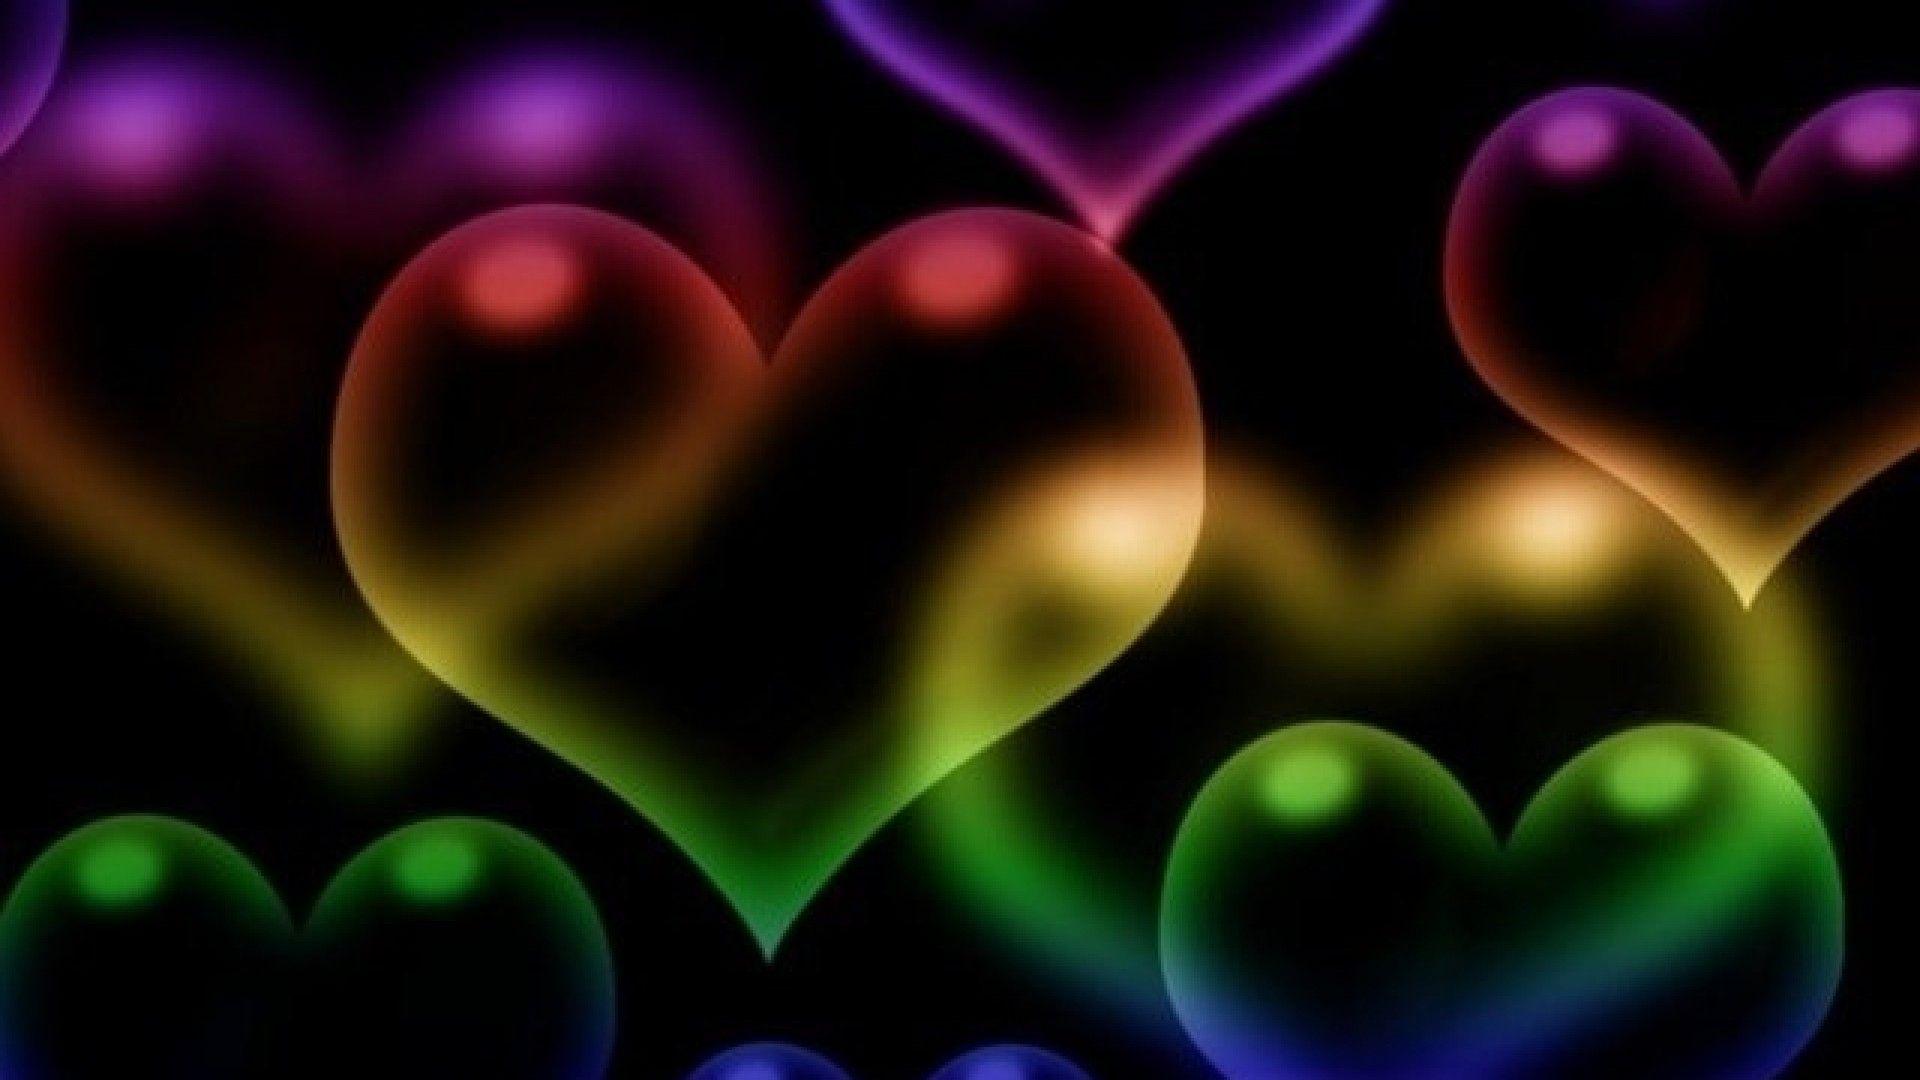 Love Symbols Wallpaper Free Download (Picture)